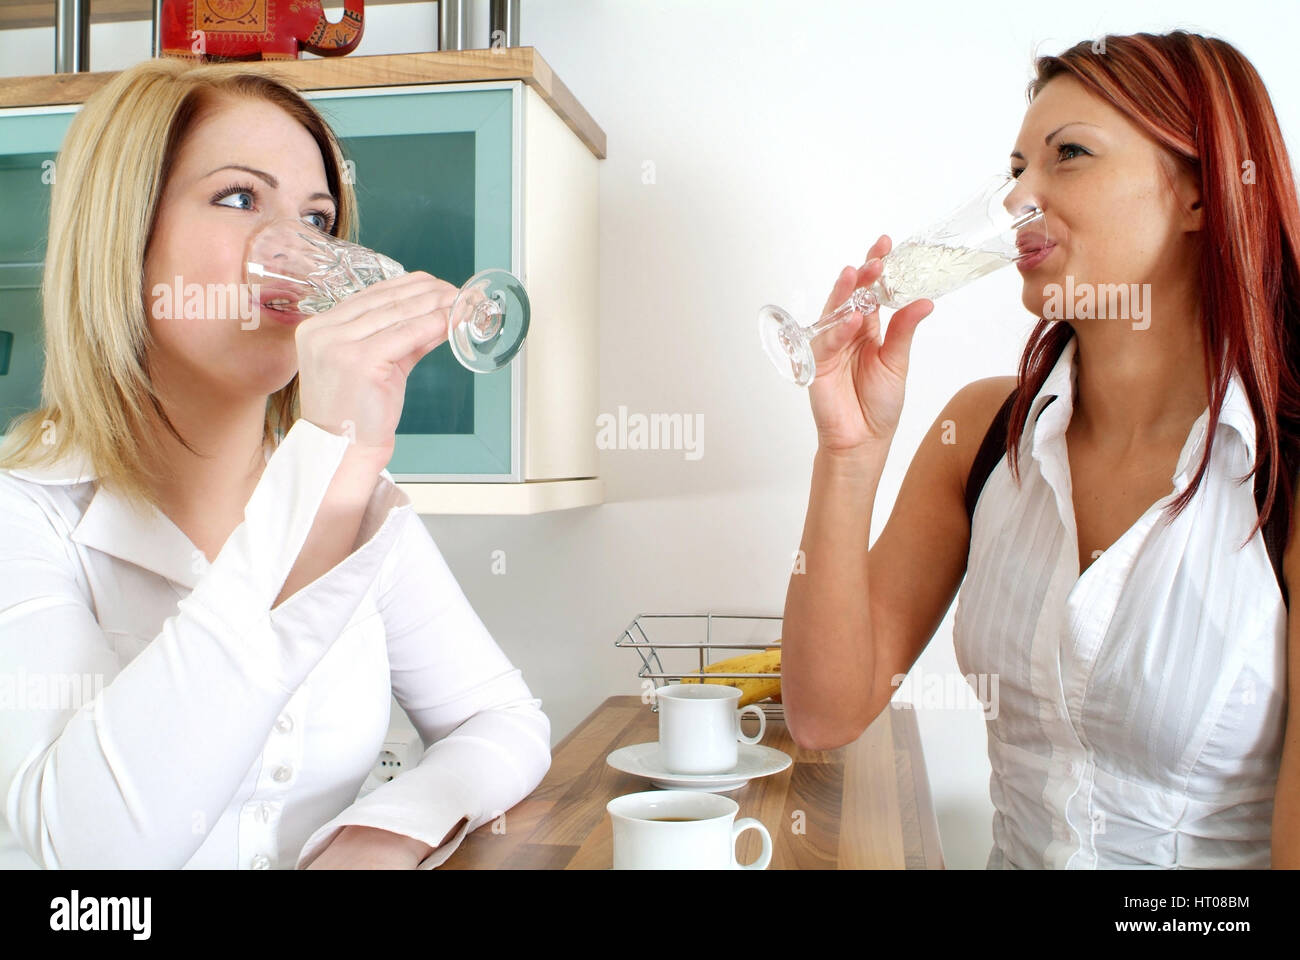 Zwei junge Frauen trinken gemeinsam Sekt an der Kuechenbar - deux jeunes femmes de boire du vin mousseux Banque D'Images